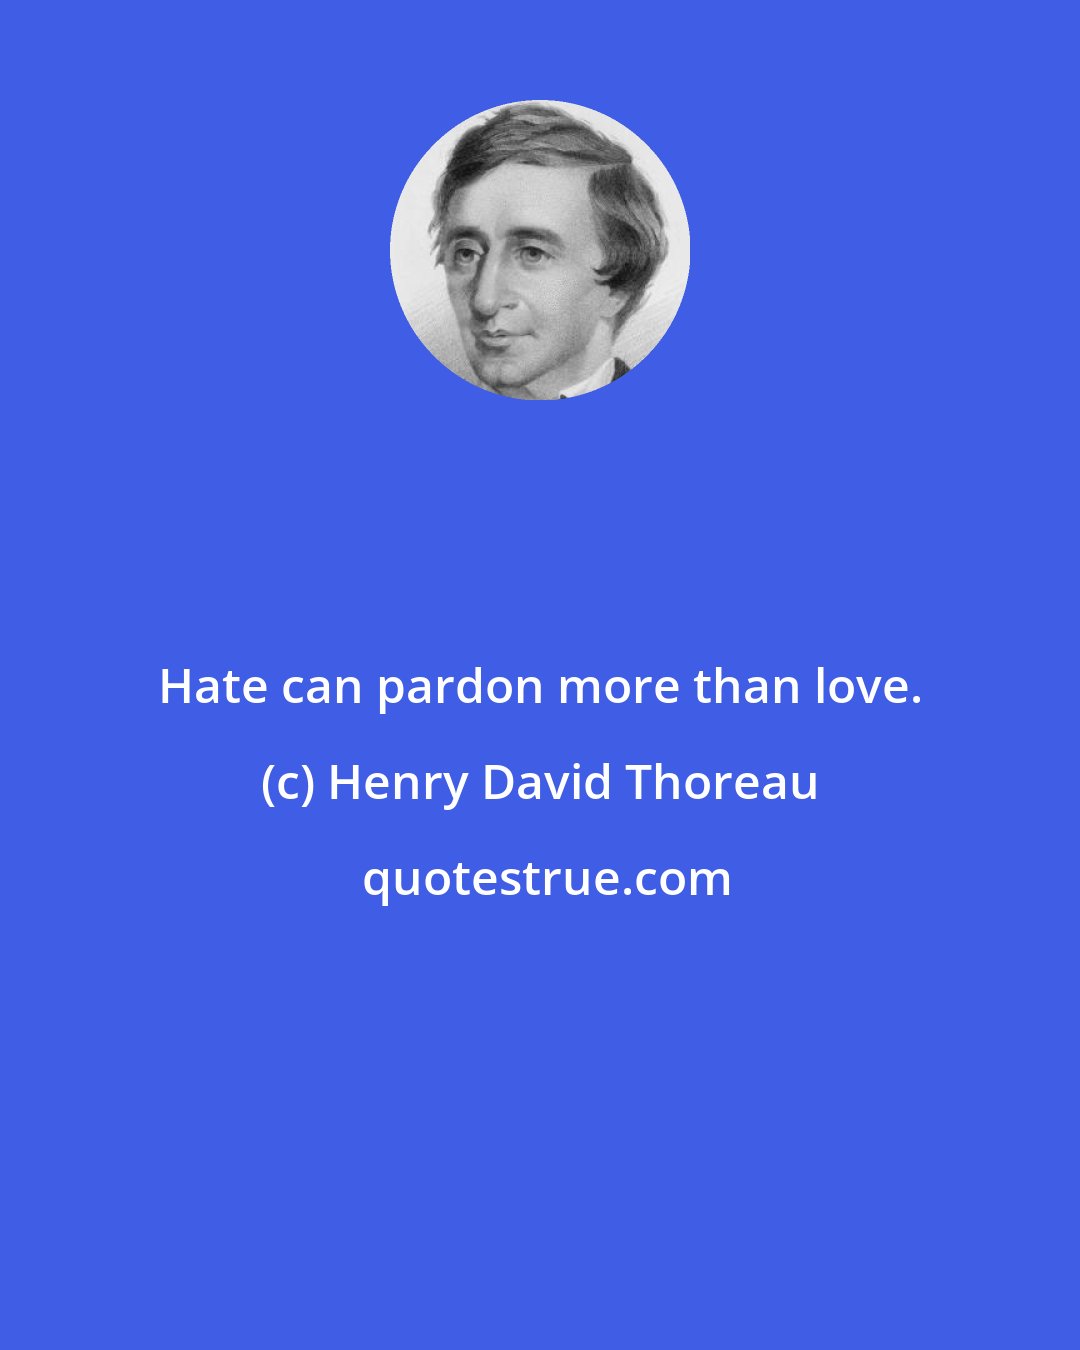 Henry David Thoreau: Hate can pardon more than love.